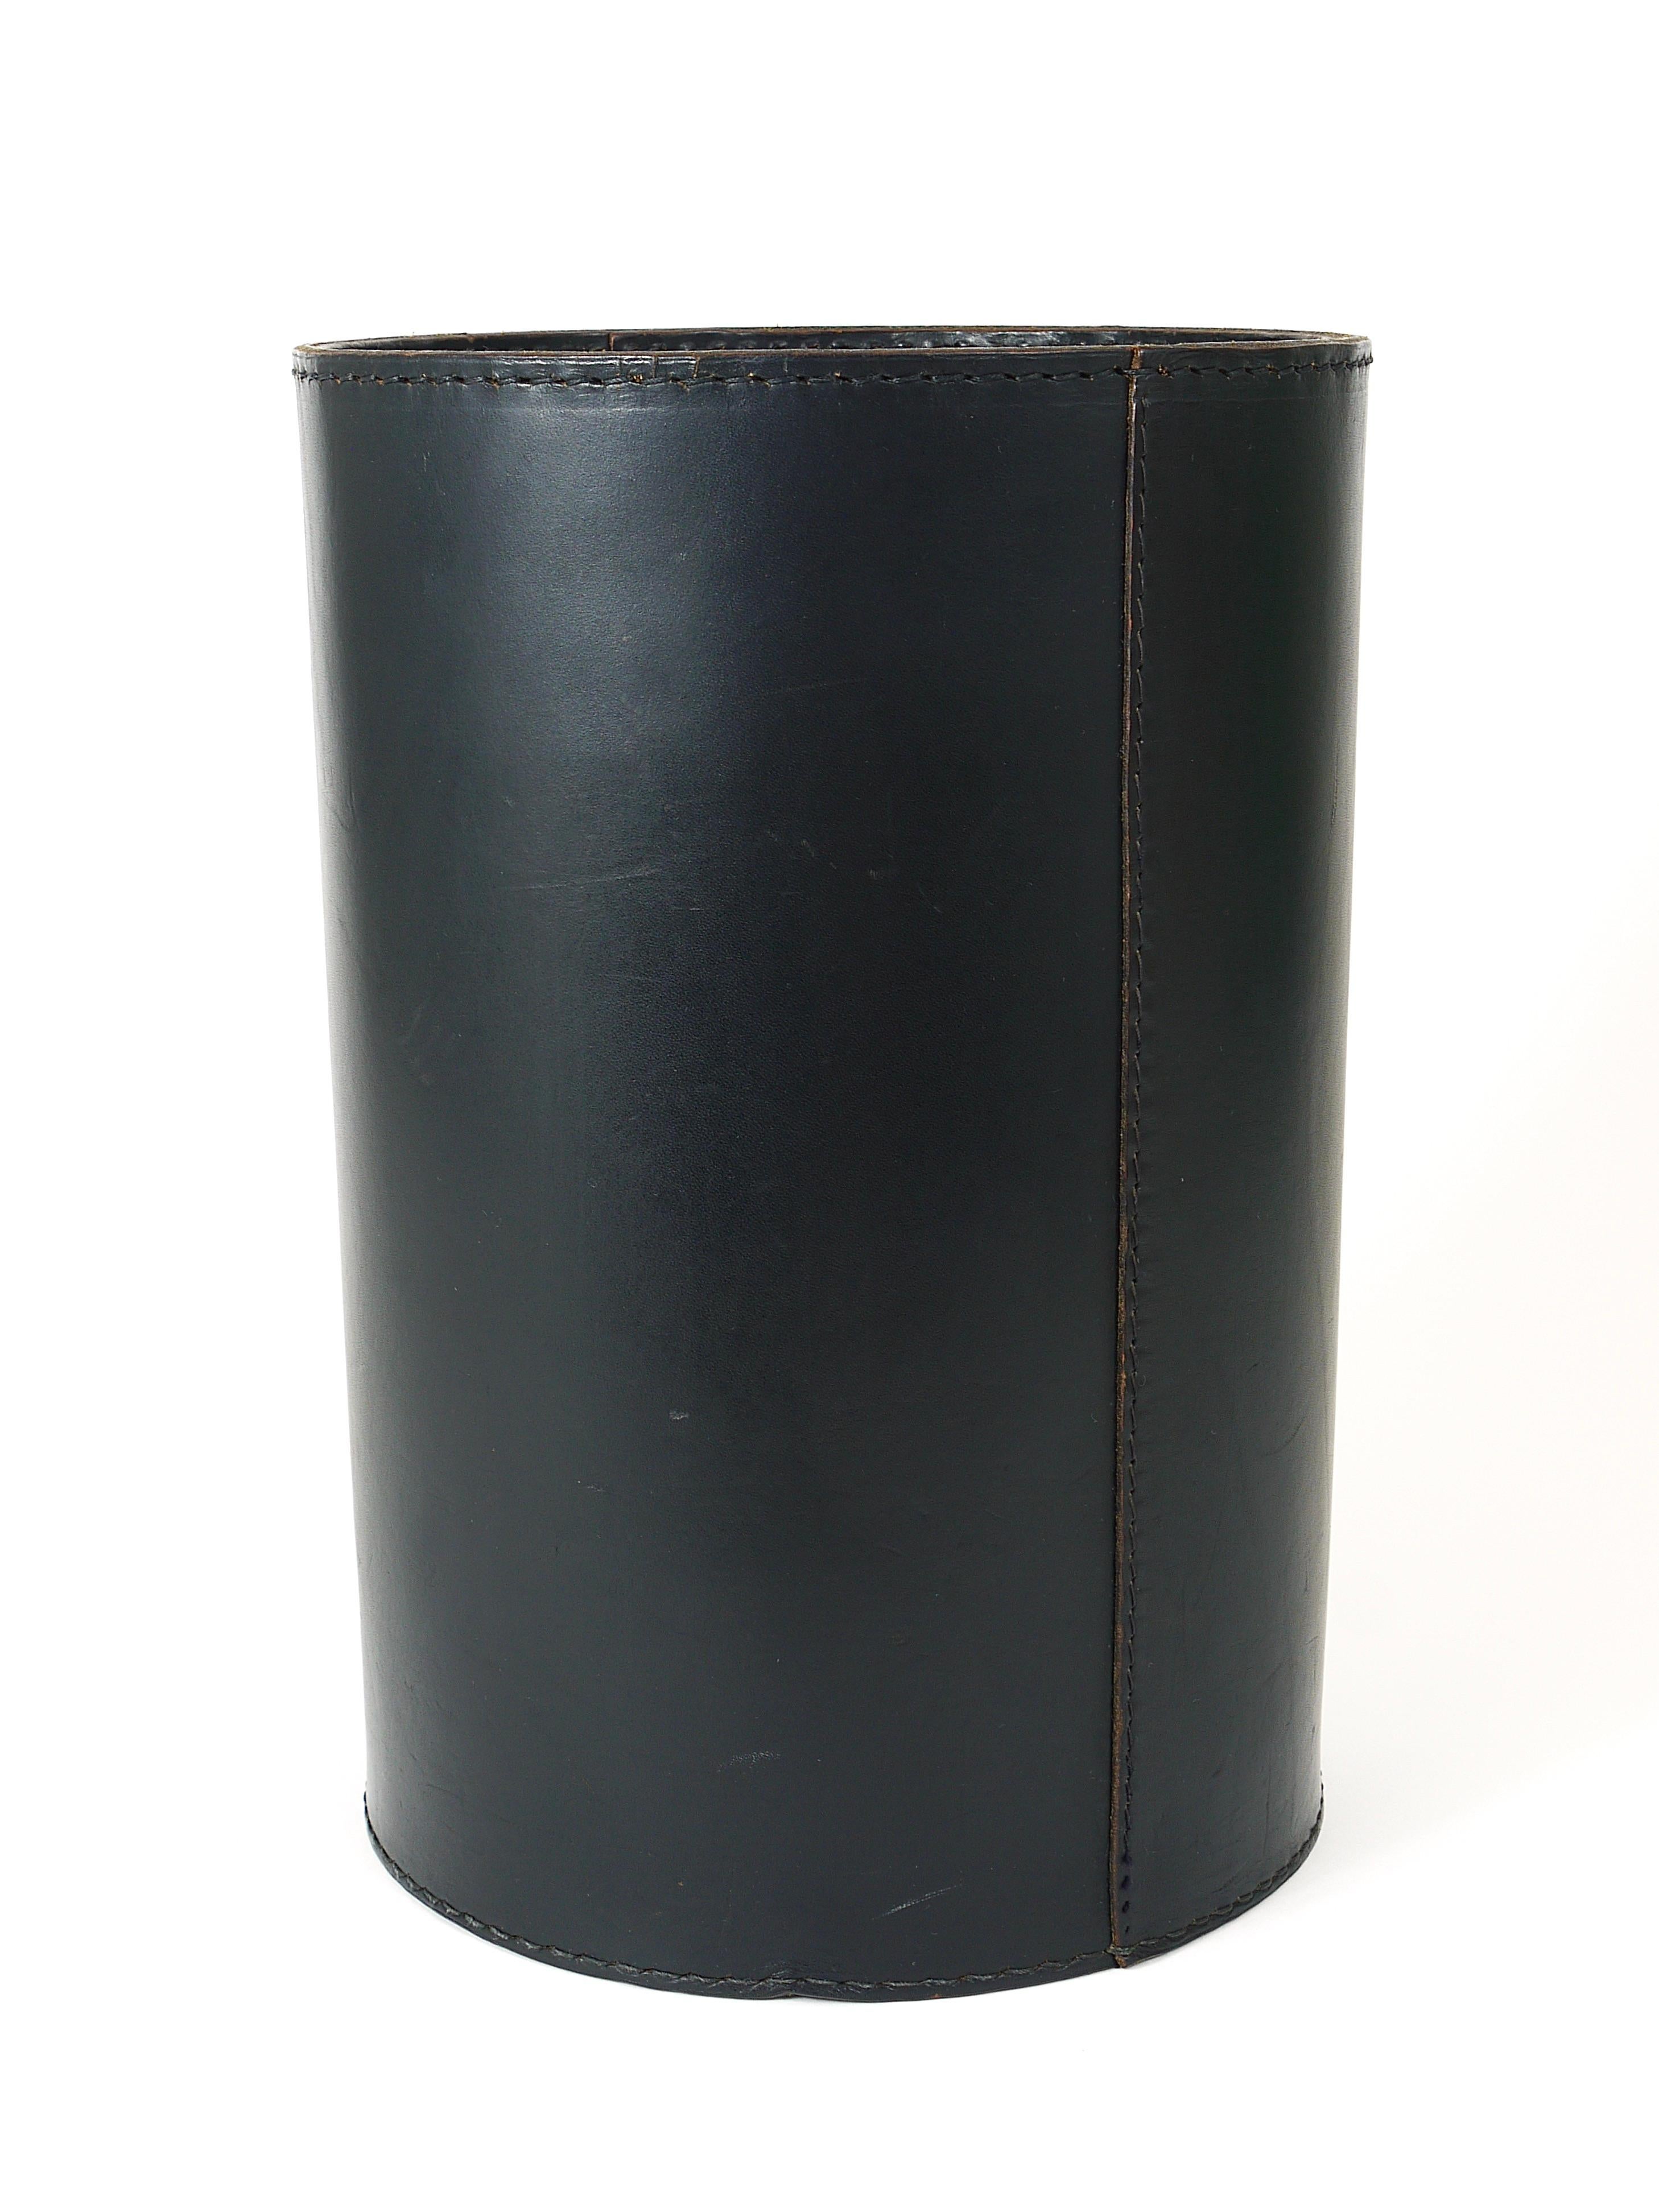 Austrian Midcentury Carl Auböck Black Leather Wastepaper Basket, Austria, 1950s